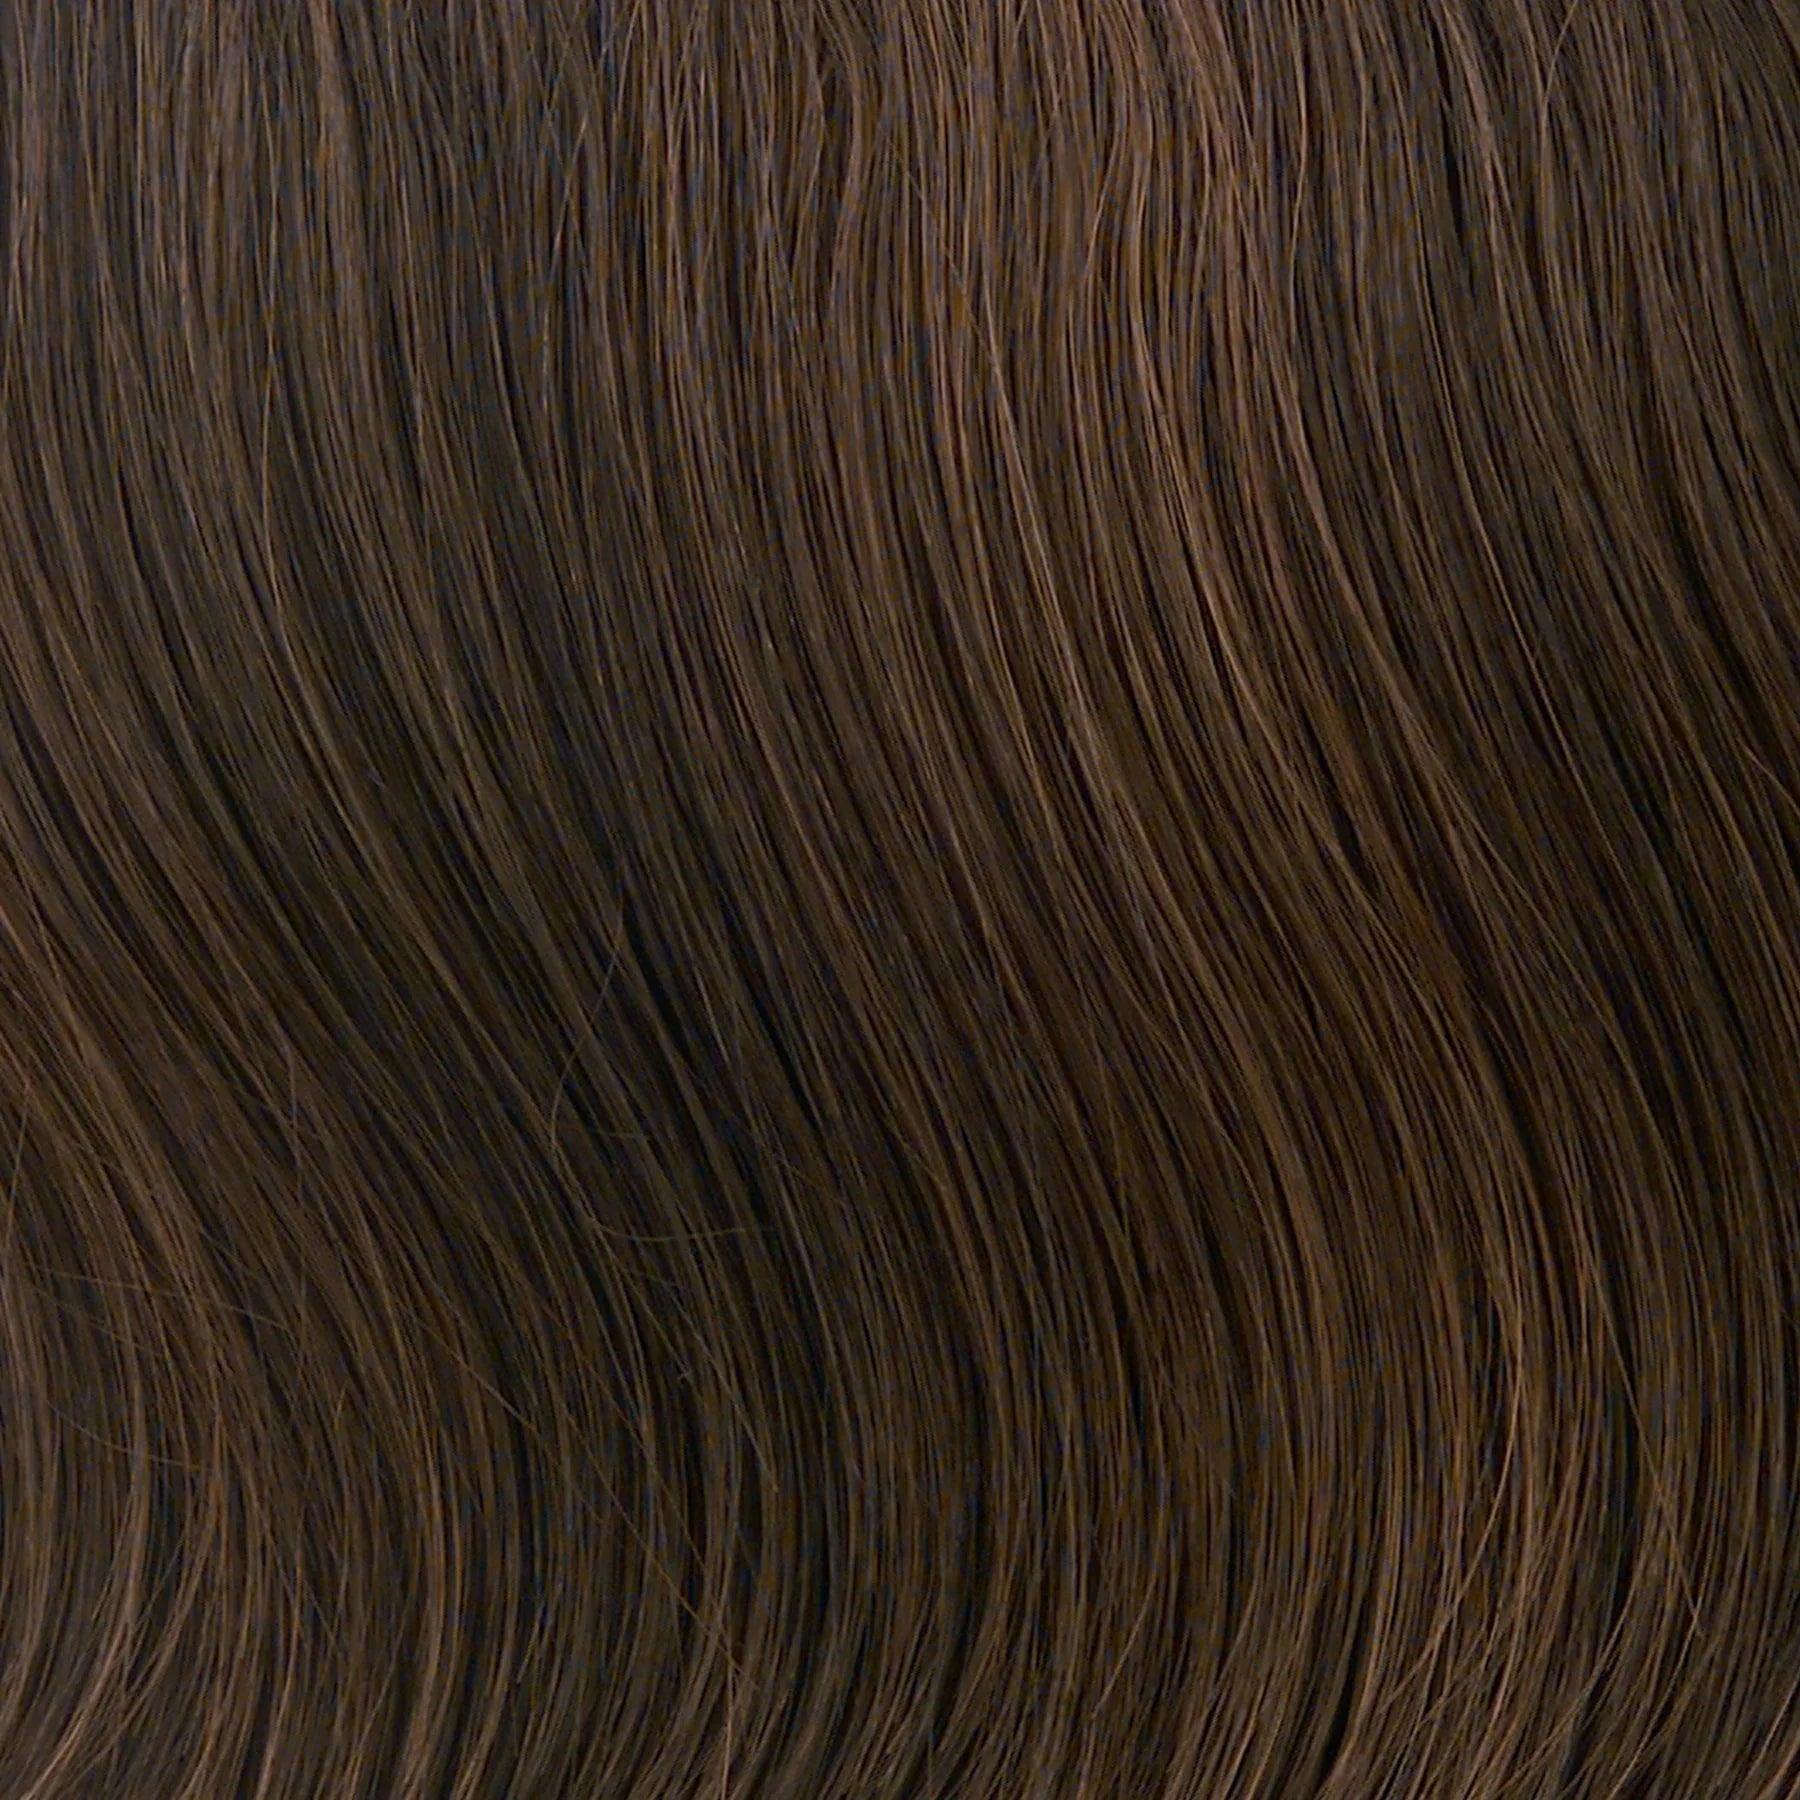 Honey Do Bun Hairpiece by Toni Brattin | Heat Friendly Synthetic | Clearance Sale - Ultimate Looks